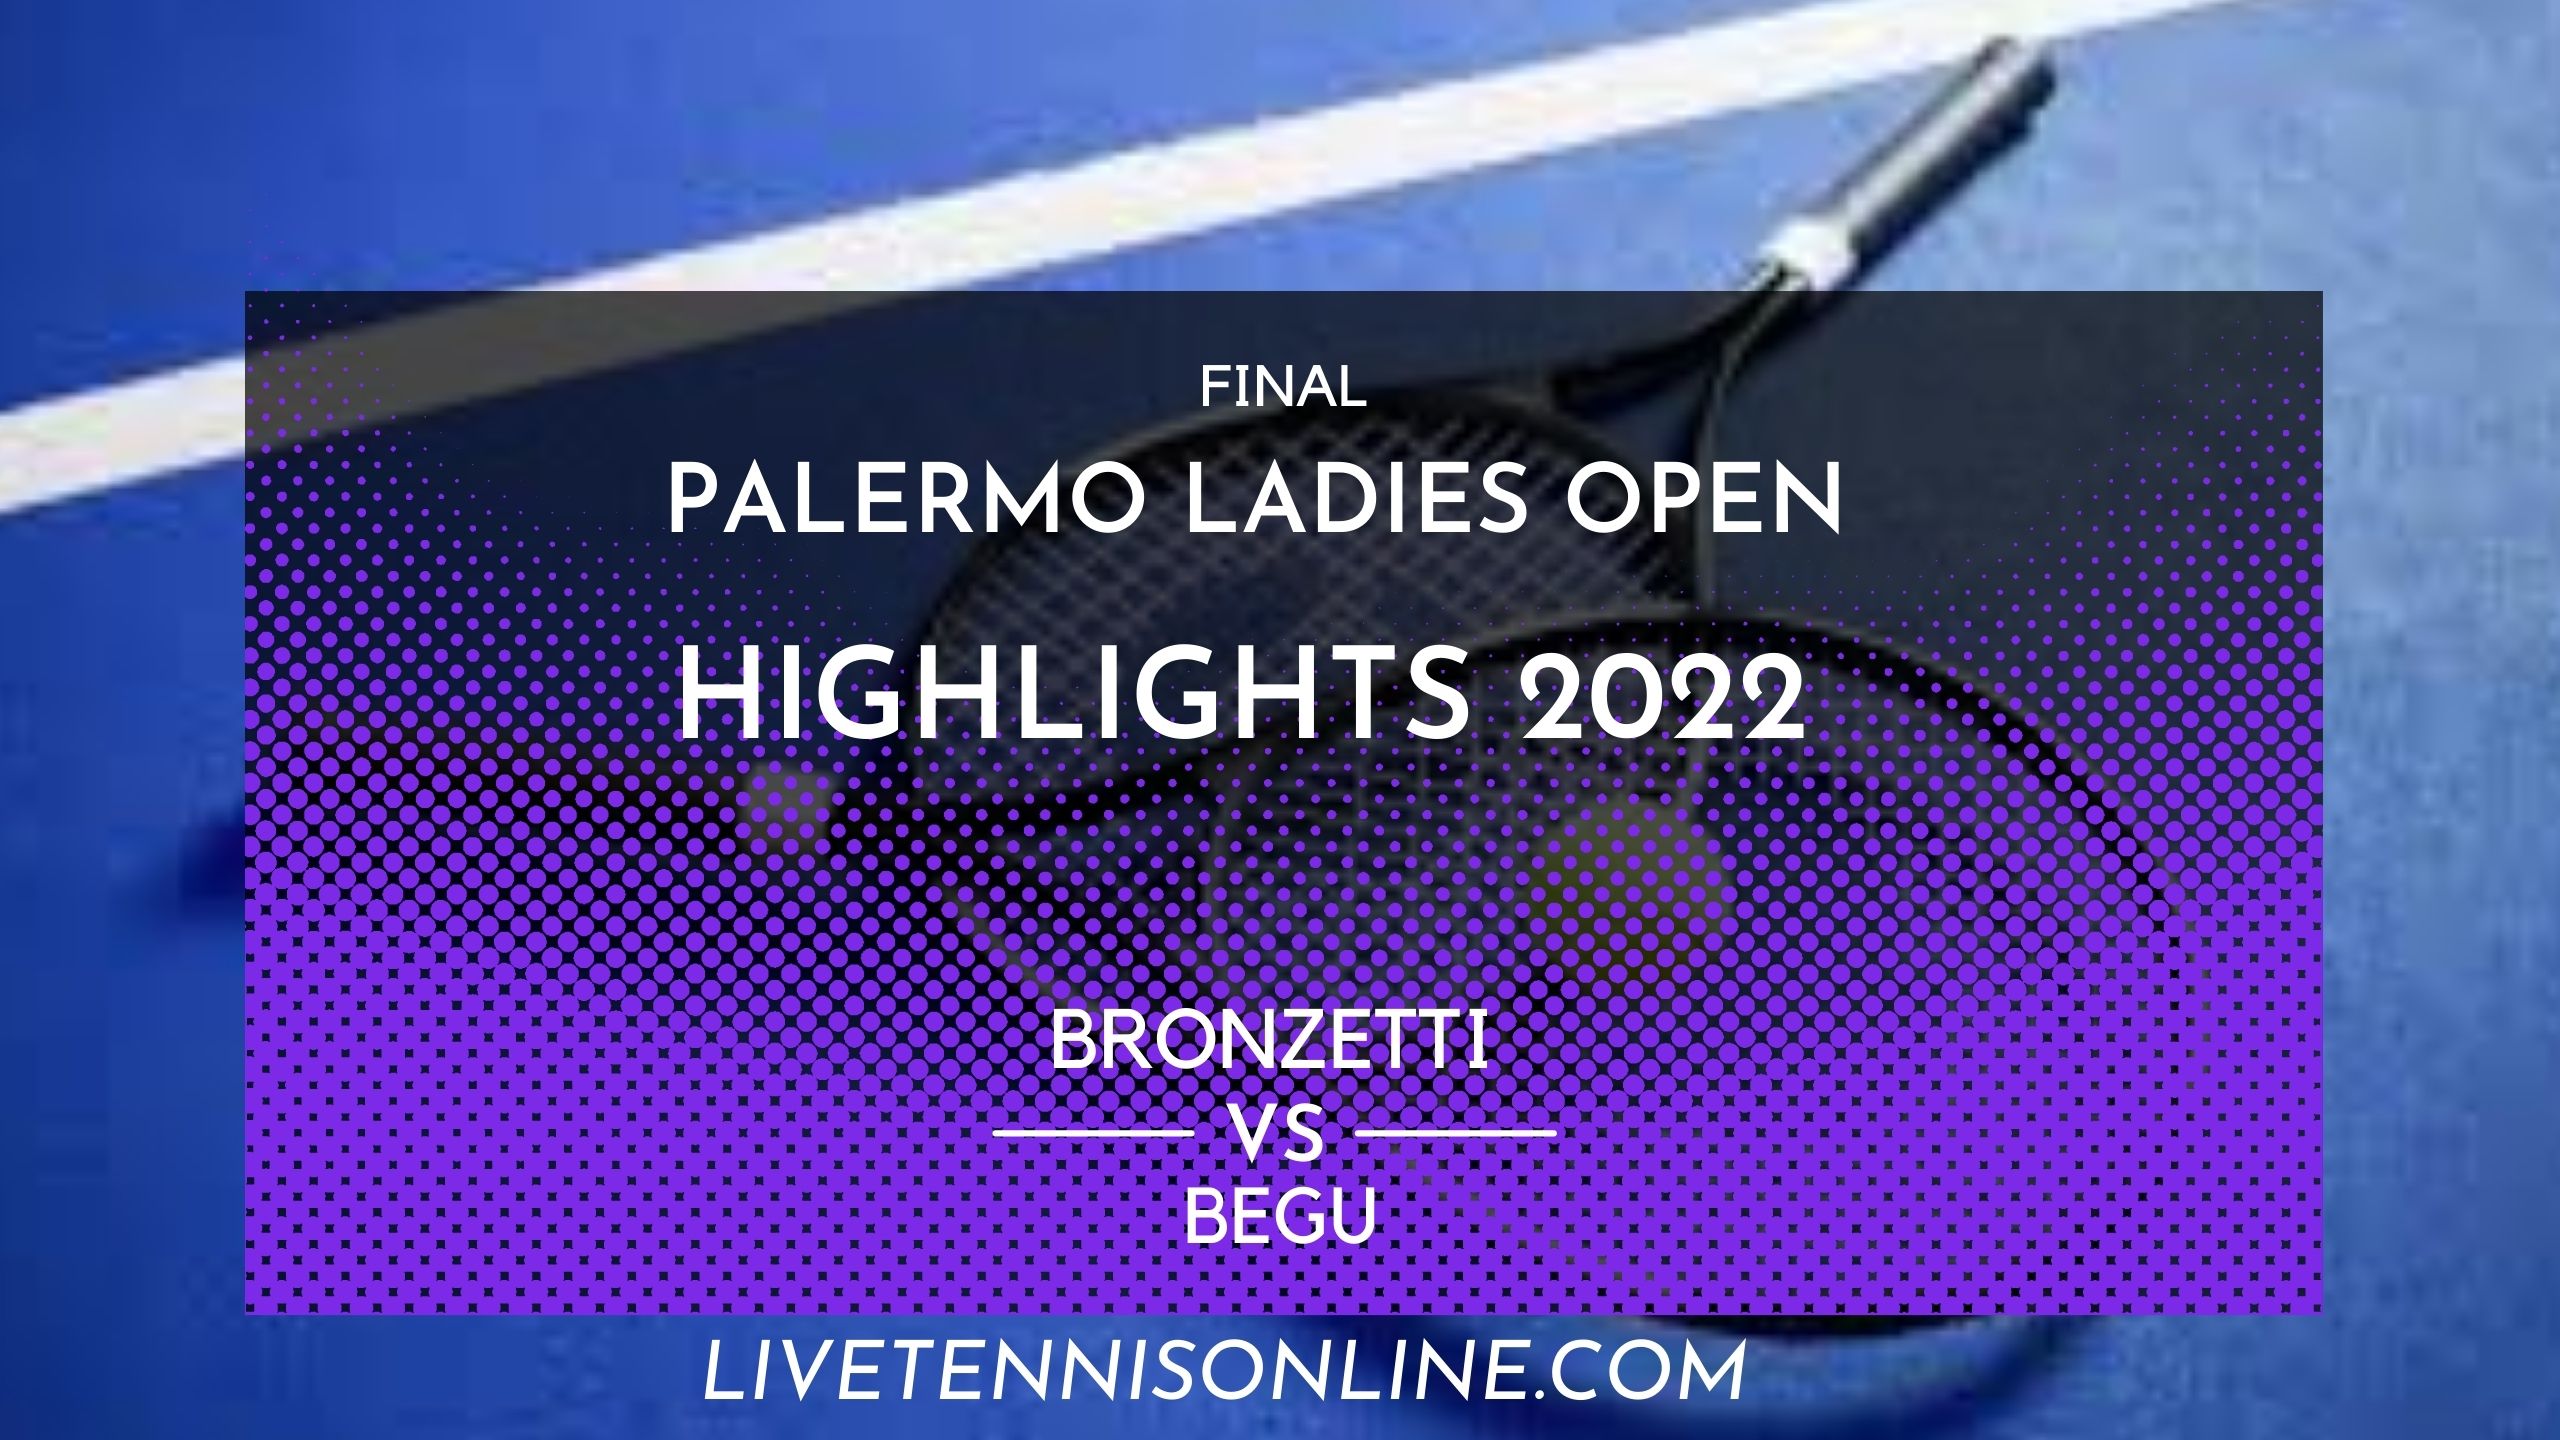 Bronzetti Vs Begu Final Highlights 2022 Palermo